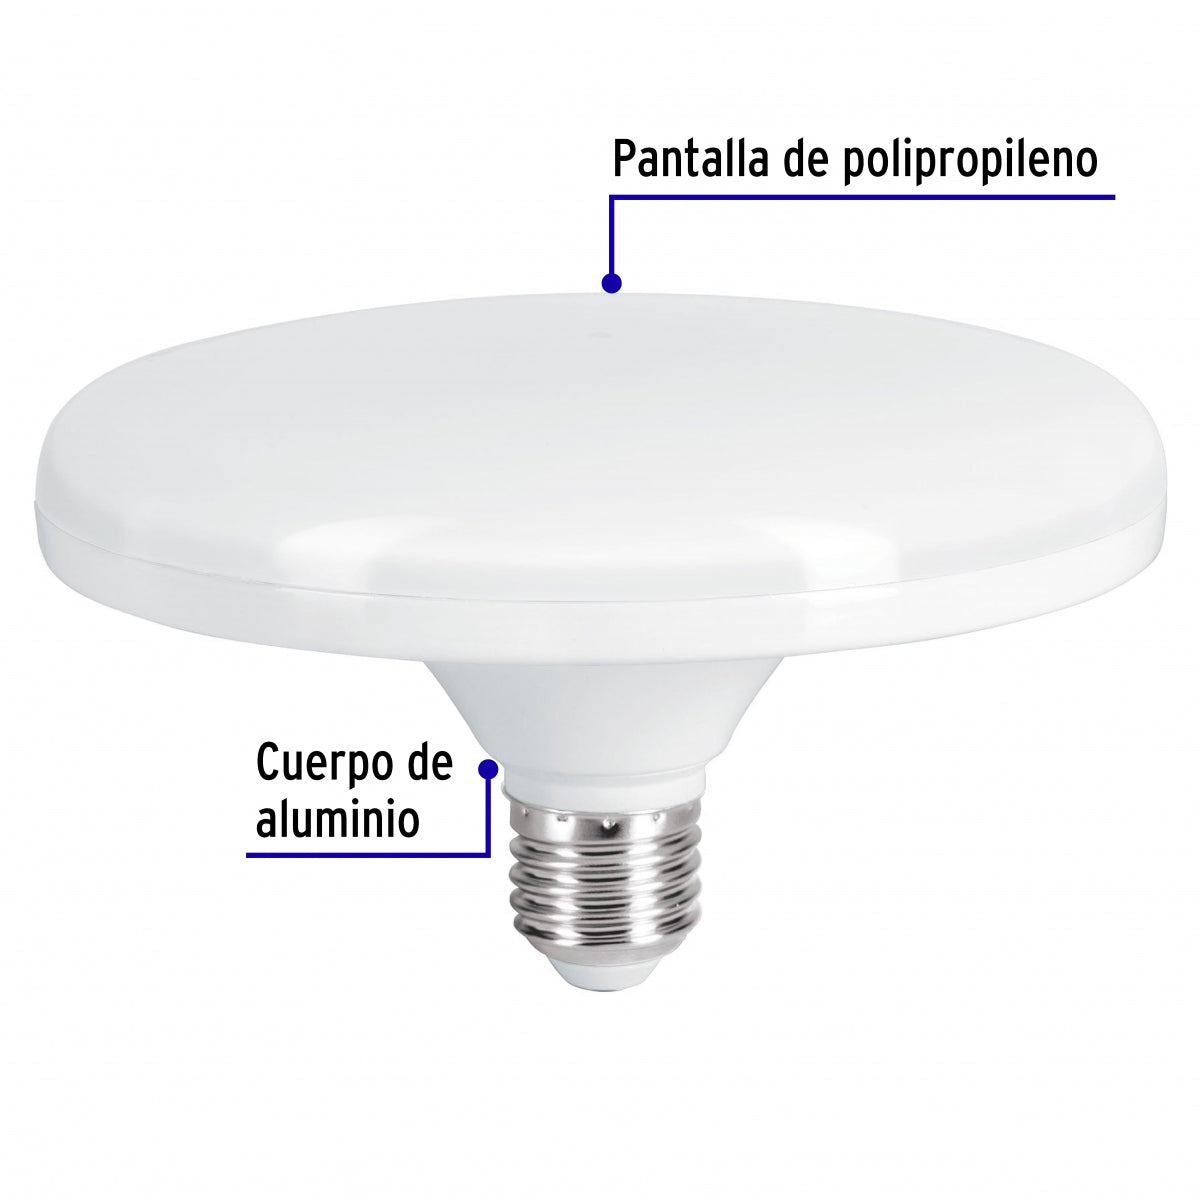 Foco LED tipo OVNI 18W (equivalente 125W) luz cálida SKU:'45631